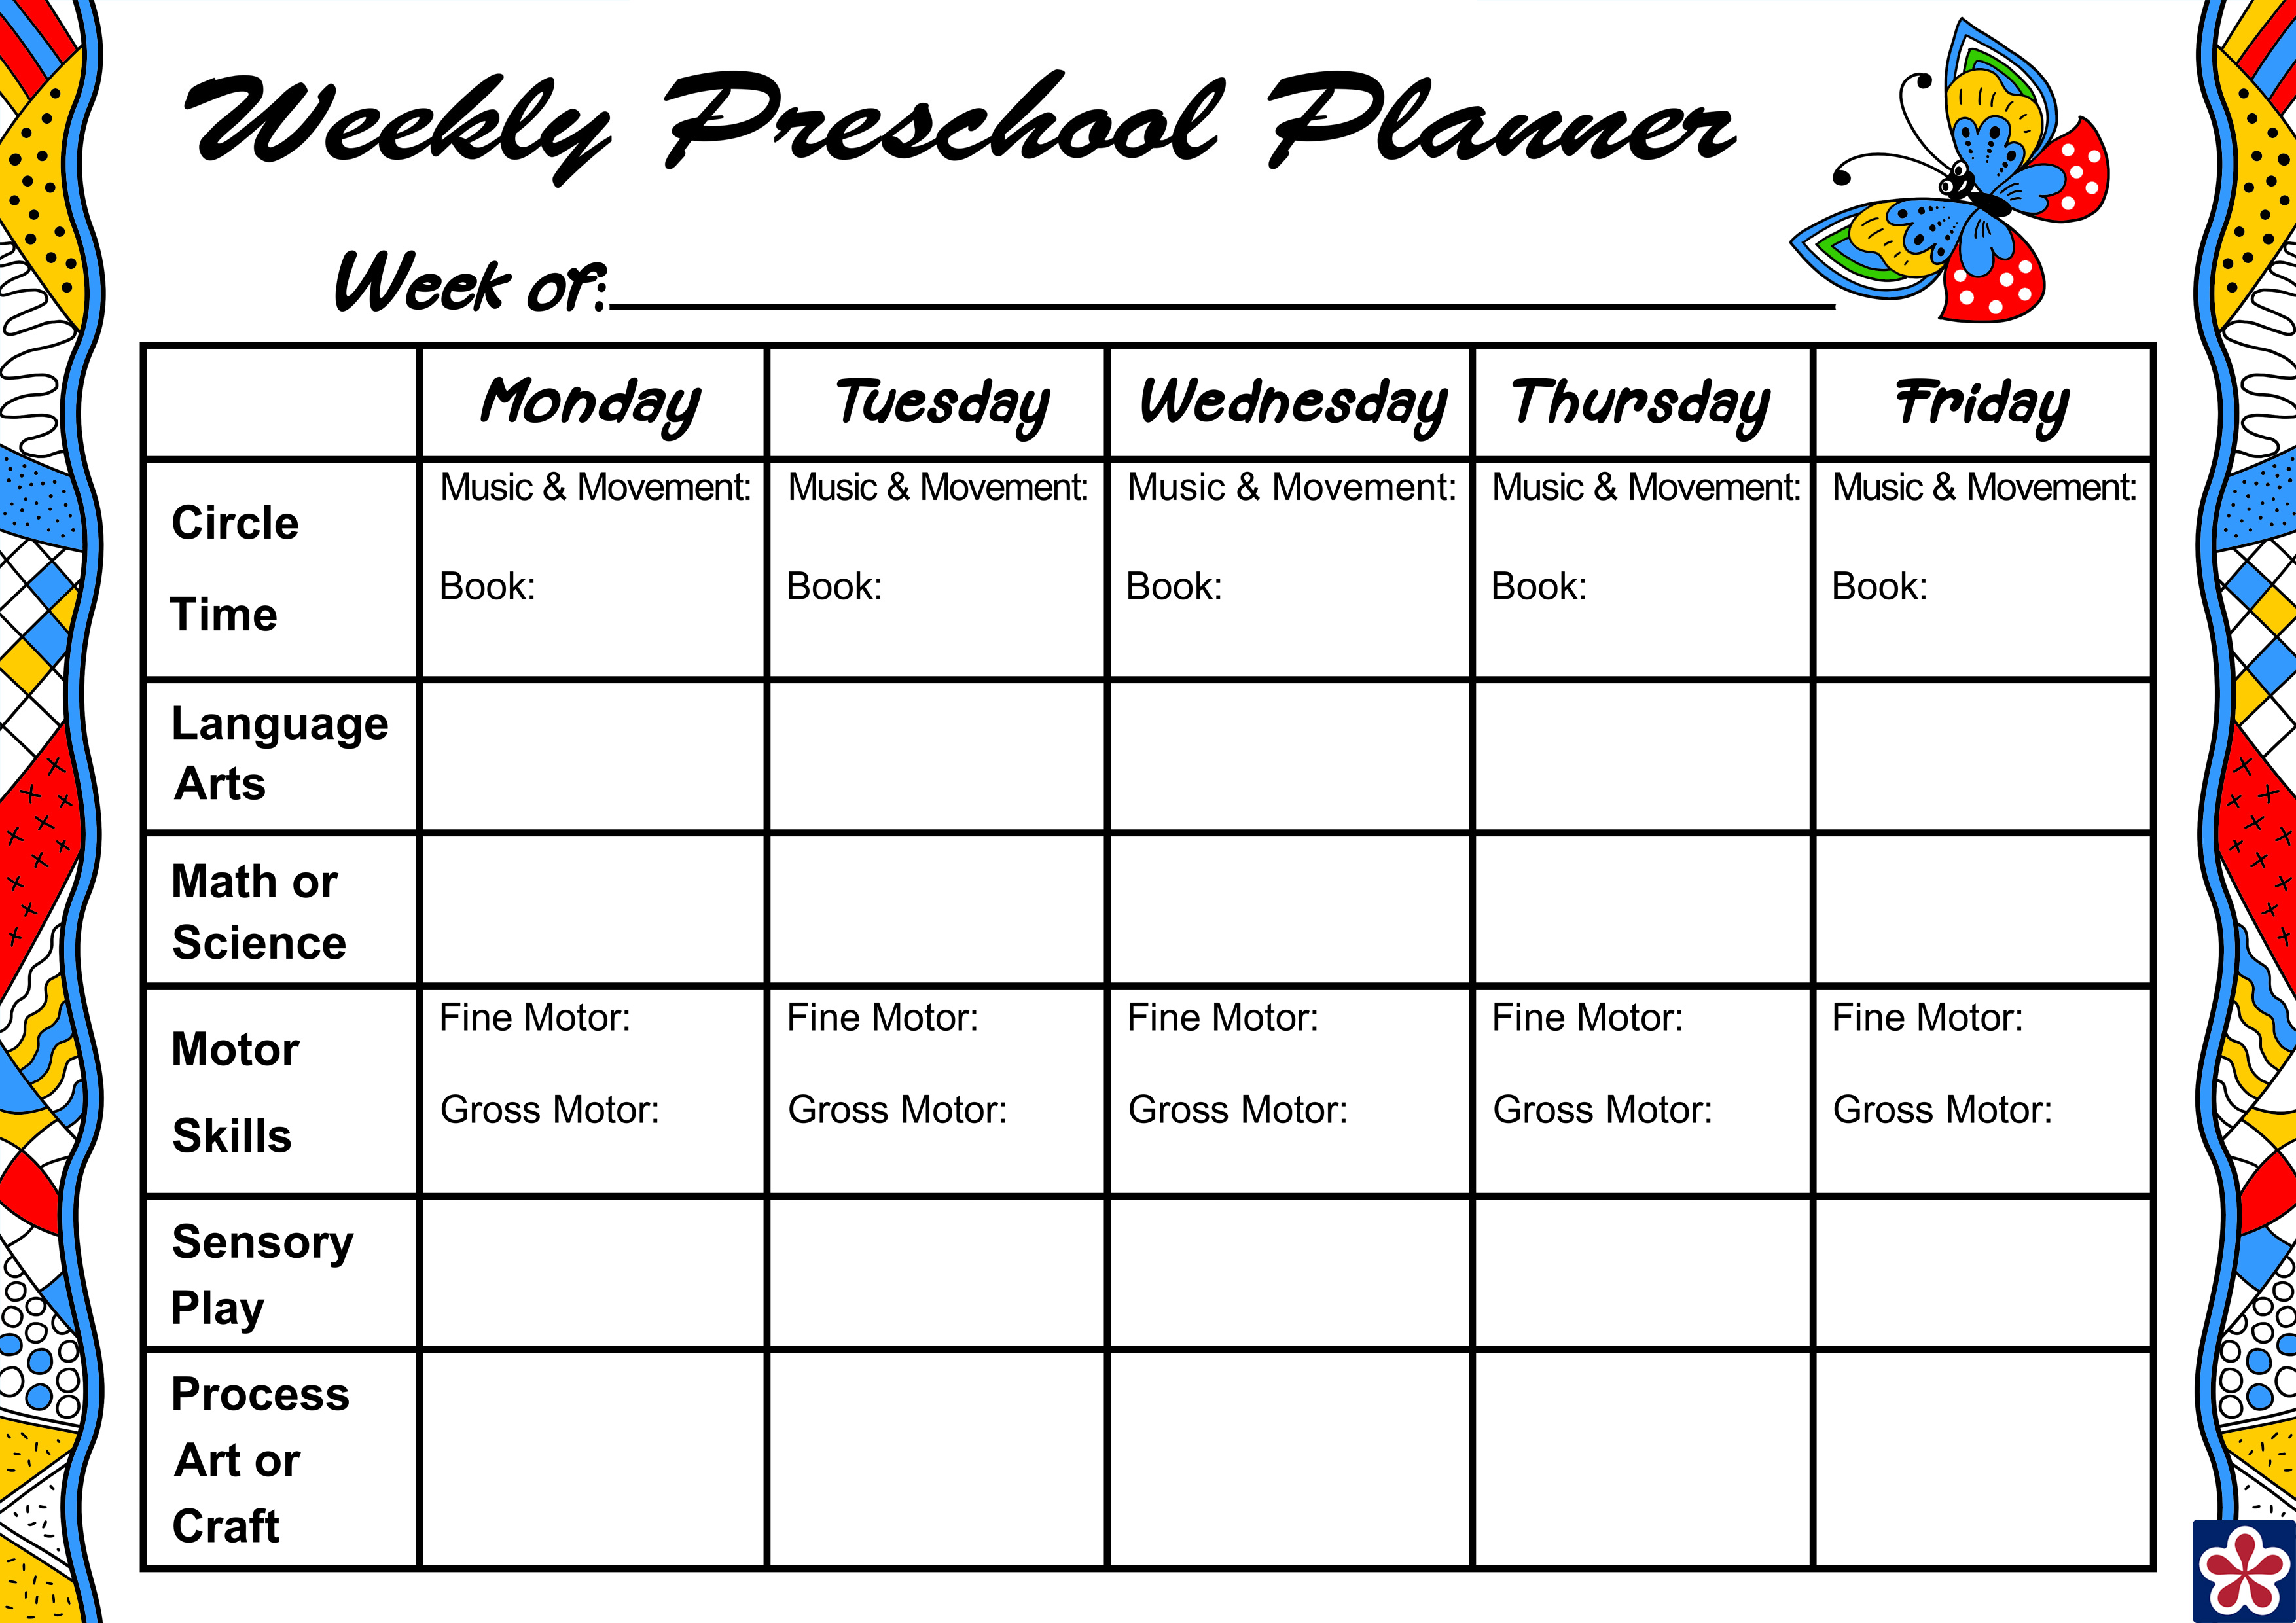 preschool daily schedule free template